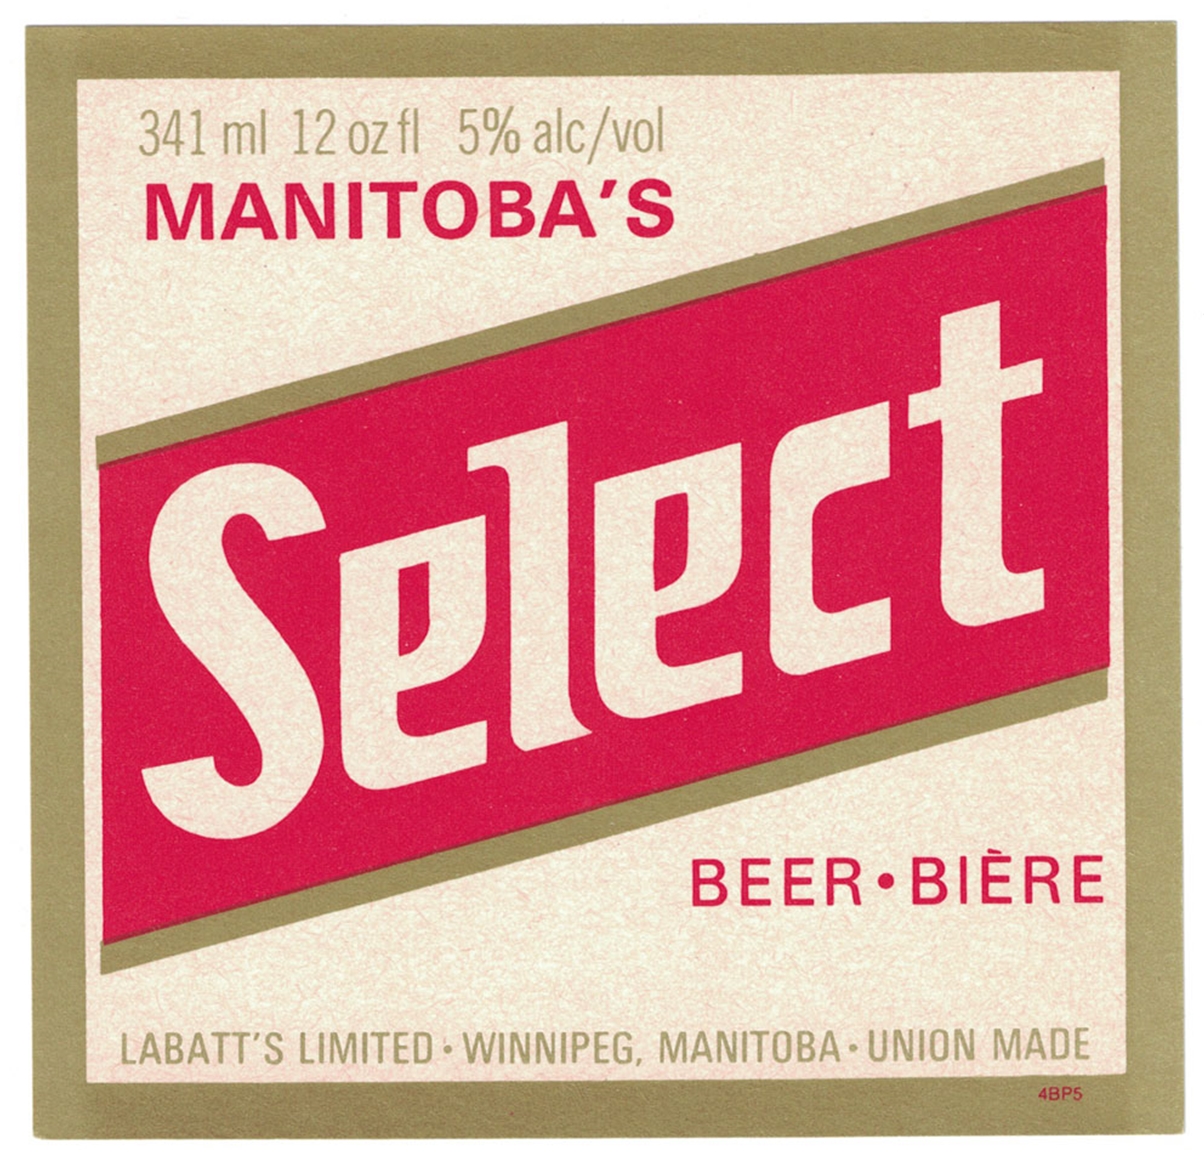 Manitoba's Select Beer Bière Label